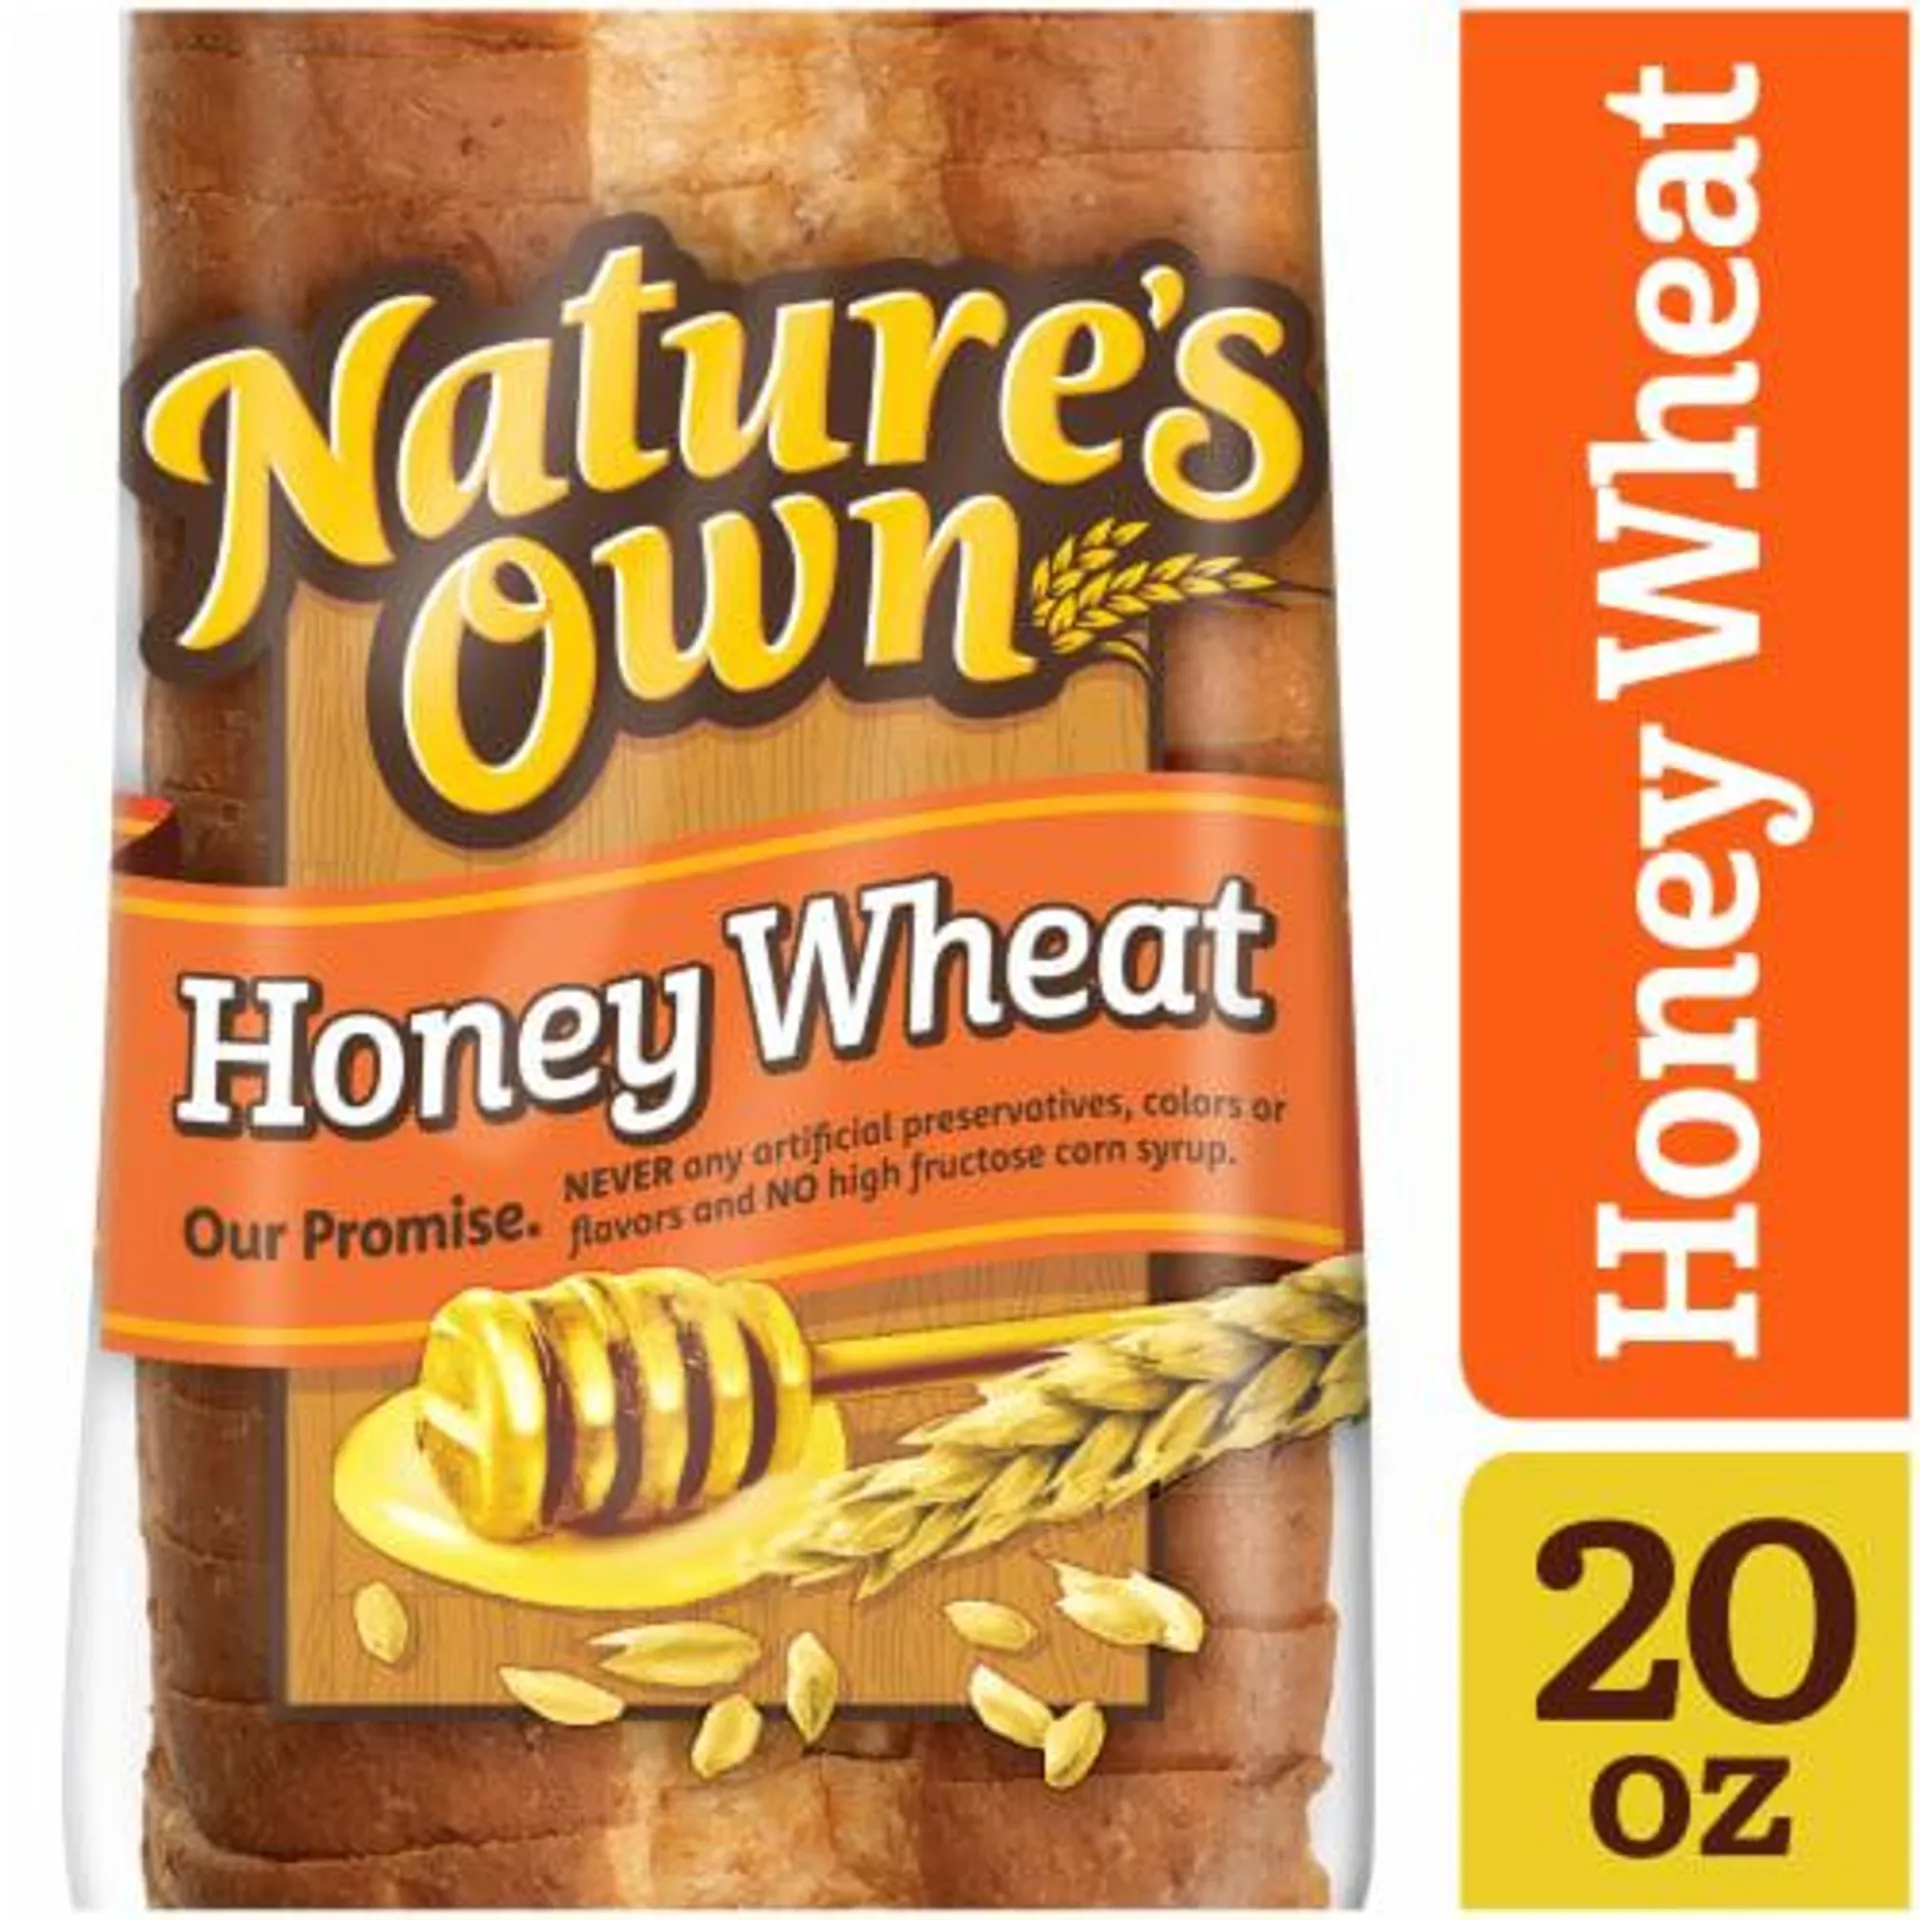 Nature's Own Honey Wheat Sandwich Bread